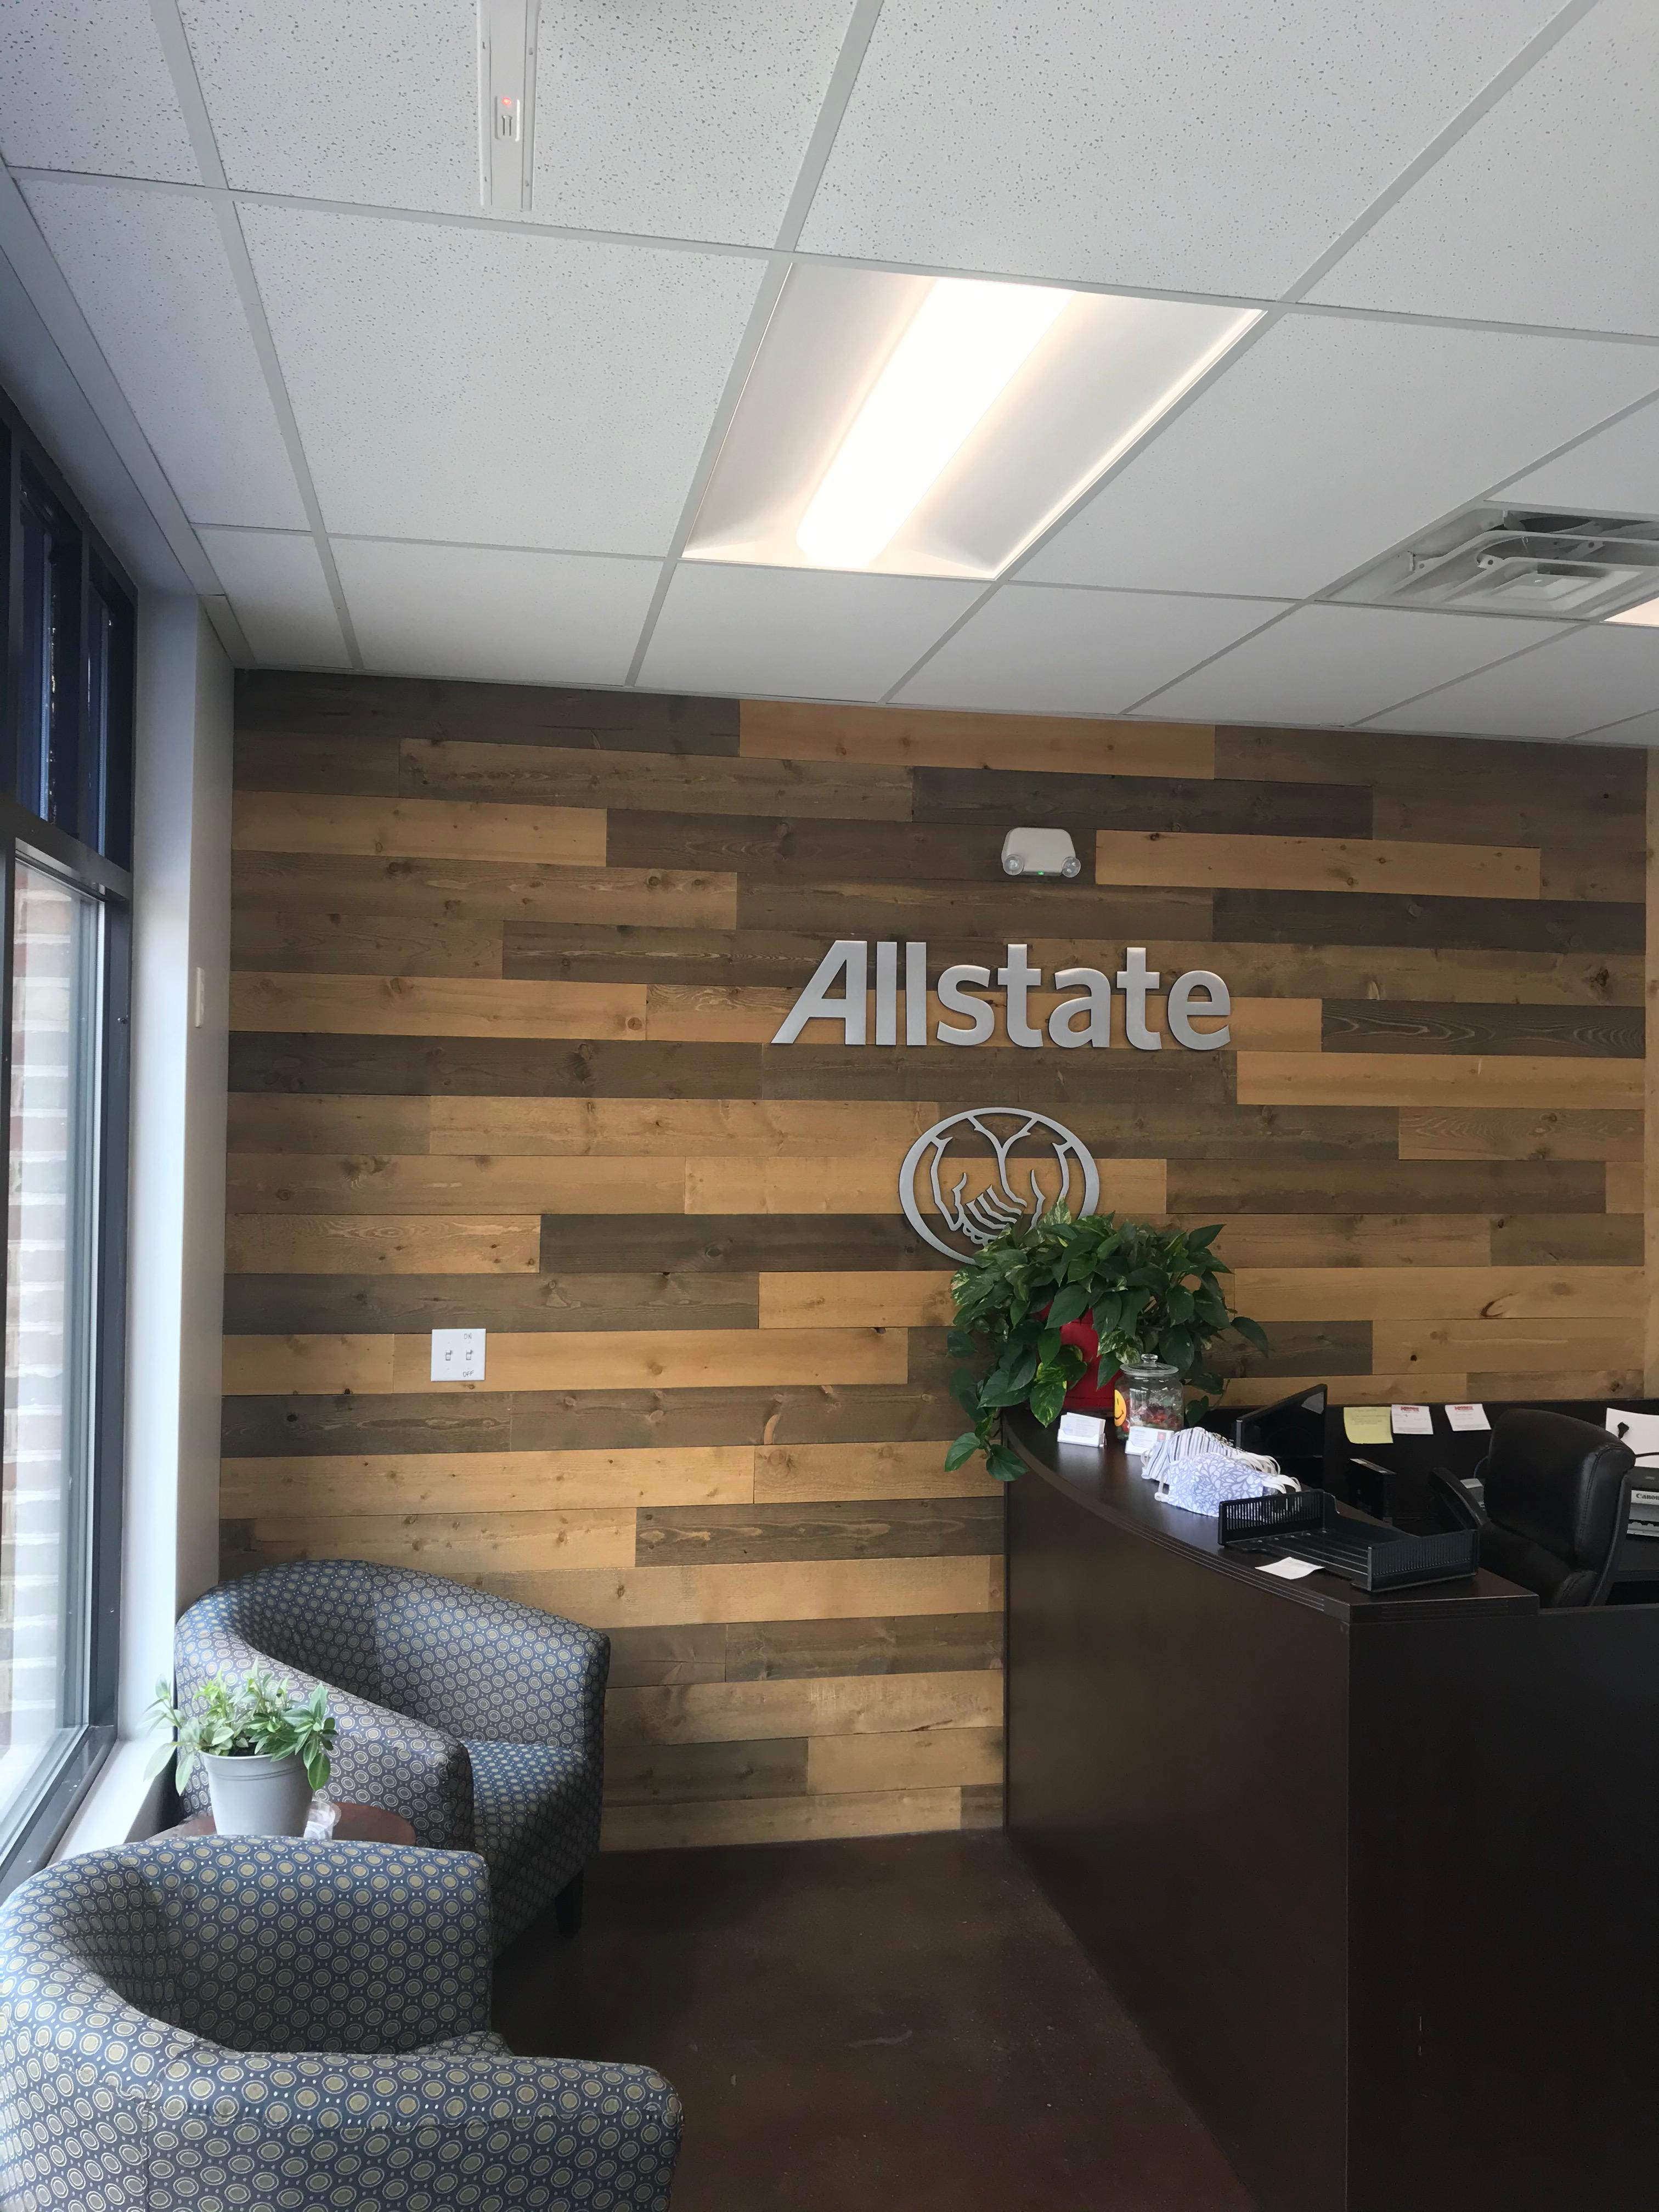 Luis Garcia: Allstate Insurance Photo